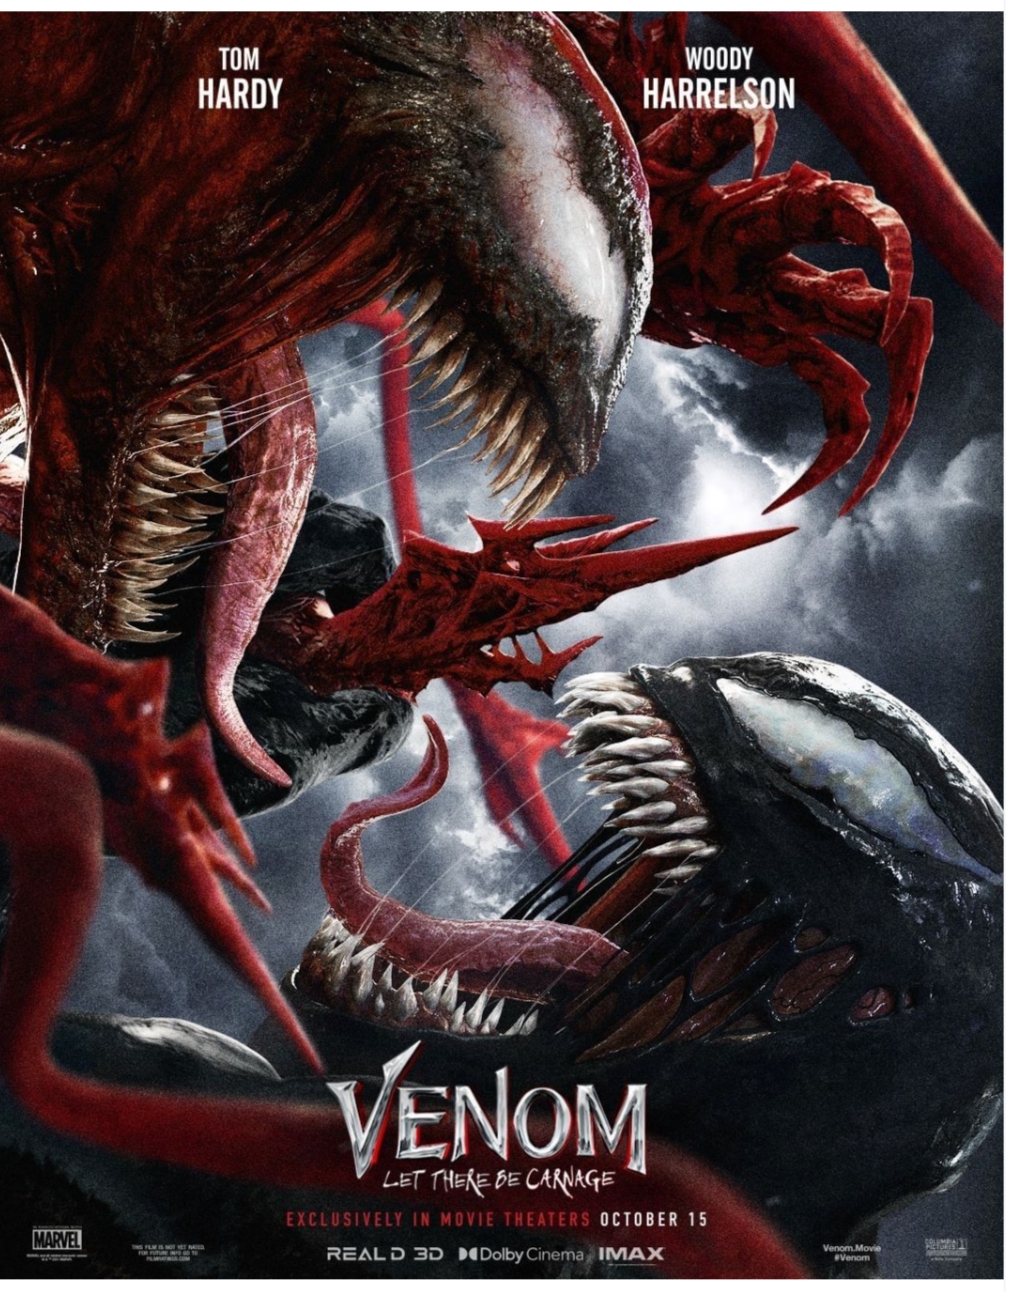 VENOM: LET THERE BE CARNAGE  2021 | SUPERHERO | Venom: Let There Be Carnage Full movie|  Venom: Let There Be Carnage Full movie|-Online Movie Overview, Cast, Reviews,NewsVenom: Let There Be Carnage R-rated,Venom: Let There Be Carnage Full movie,Venom: Let There Be Carnage PG-13,Venom: Let There Be Carnage age rating UK,LEGO Venom Let There Be Carnage,Venom: let there be Carnage rated R reddit,Venom: Let There Be Carnage full movie download,Venom: Let There Be Carnage trailer,